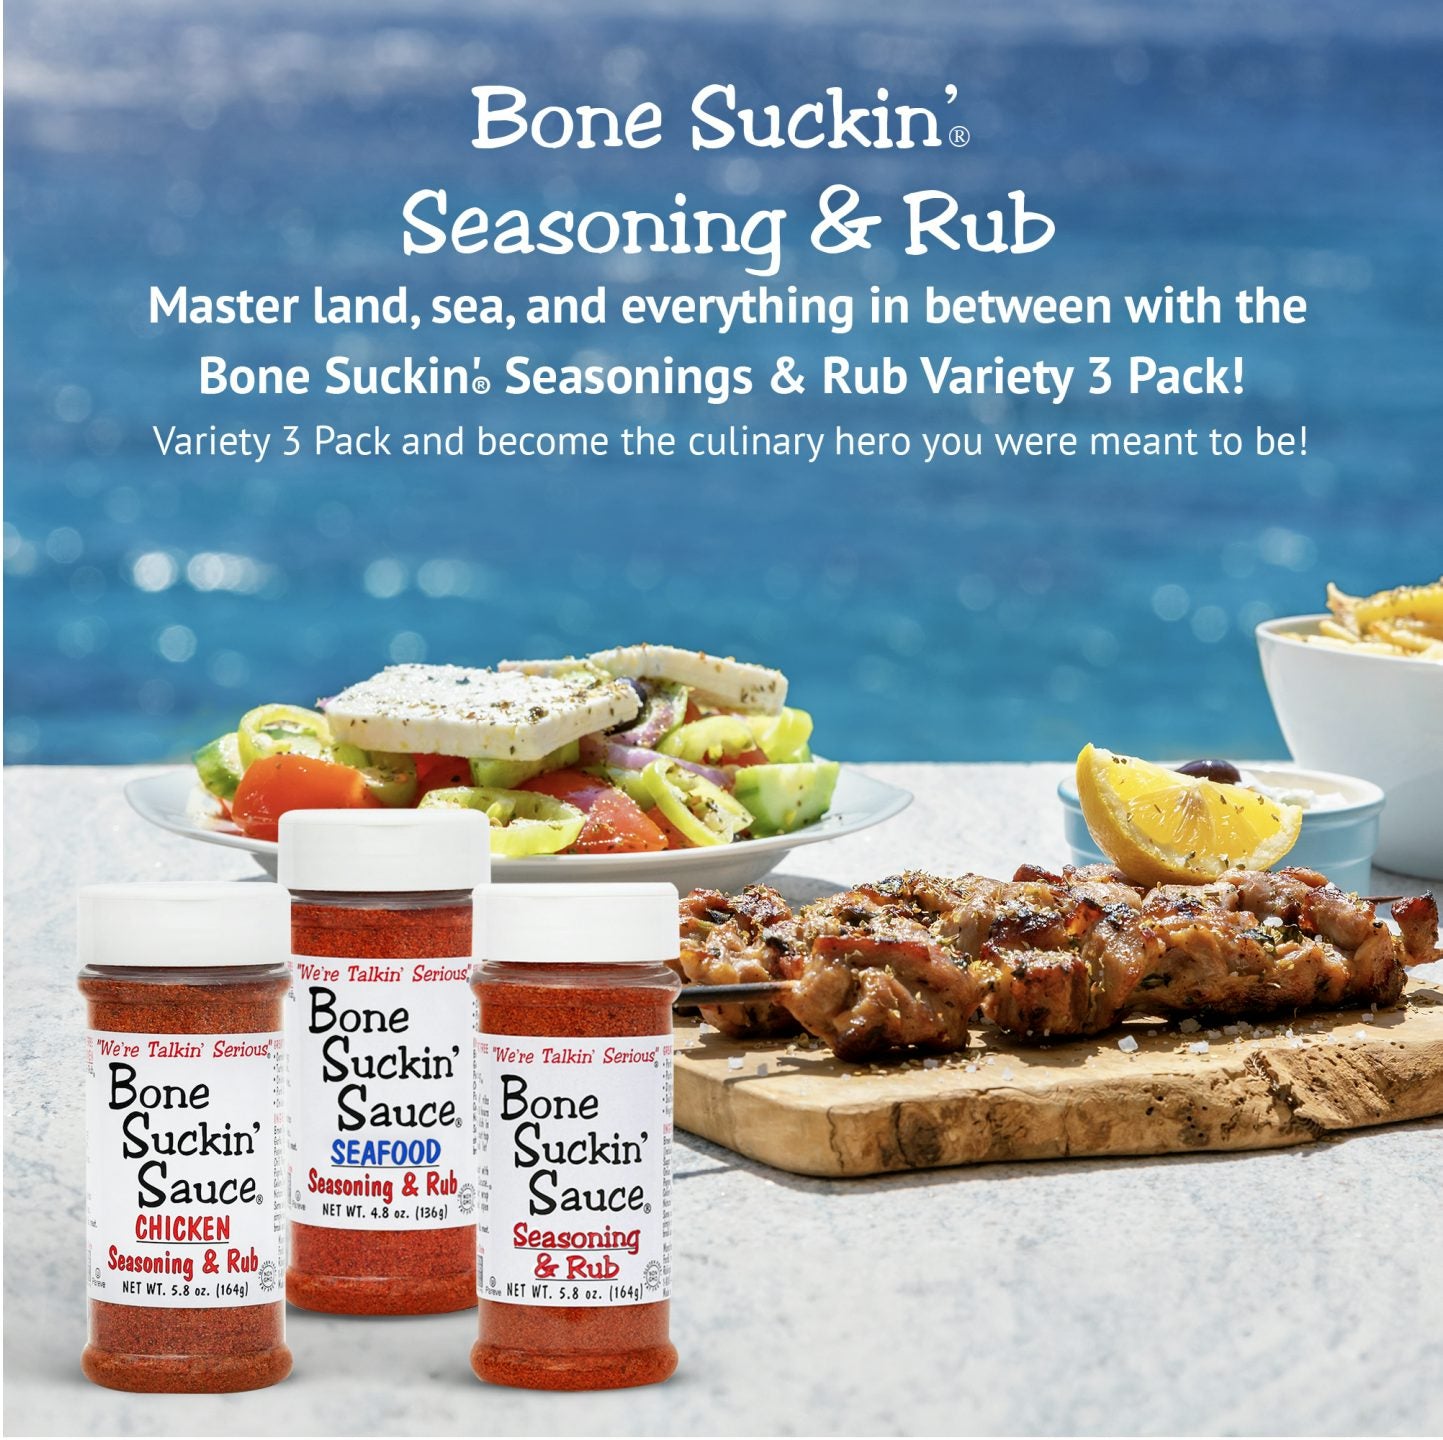 Bone Suckin Seasoning & Rub. Master land, sea, and everything in between with the Bone Suckin' Seasonings & Rub Variety 3 Pack!